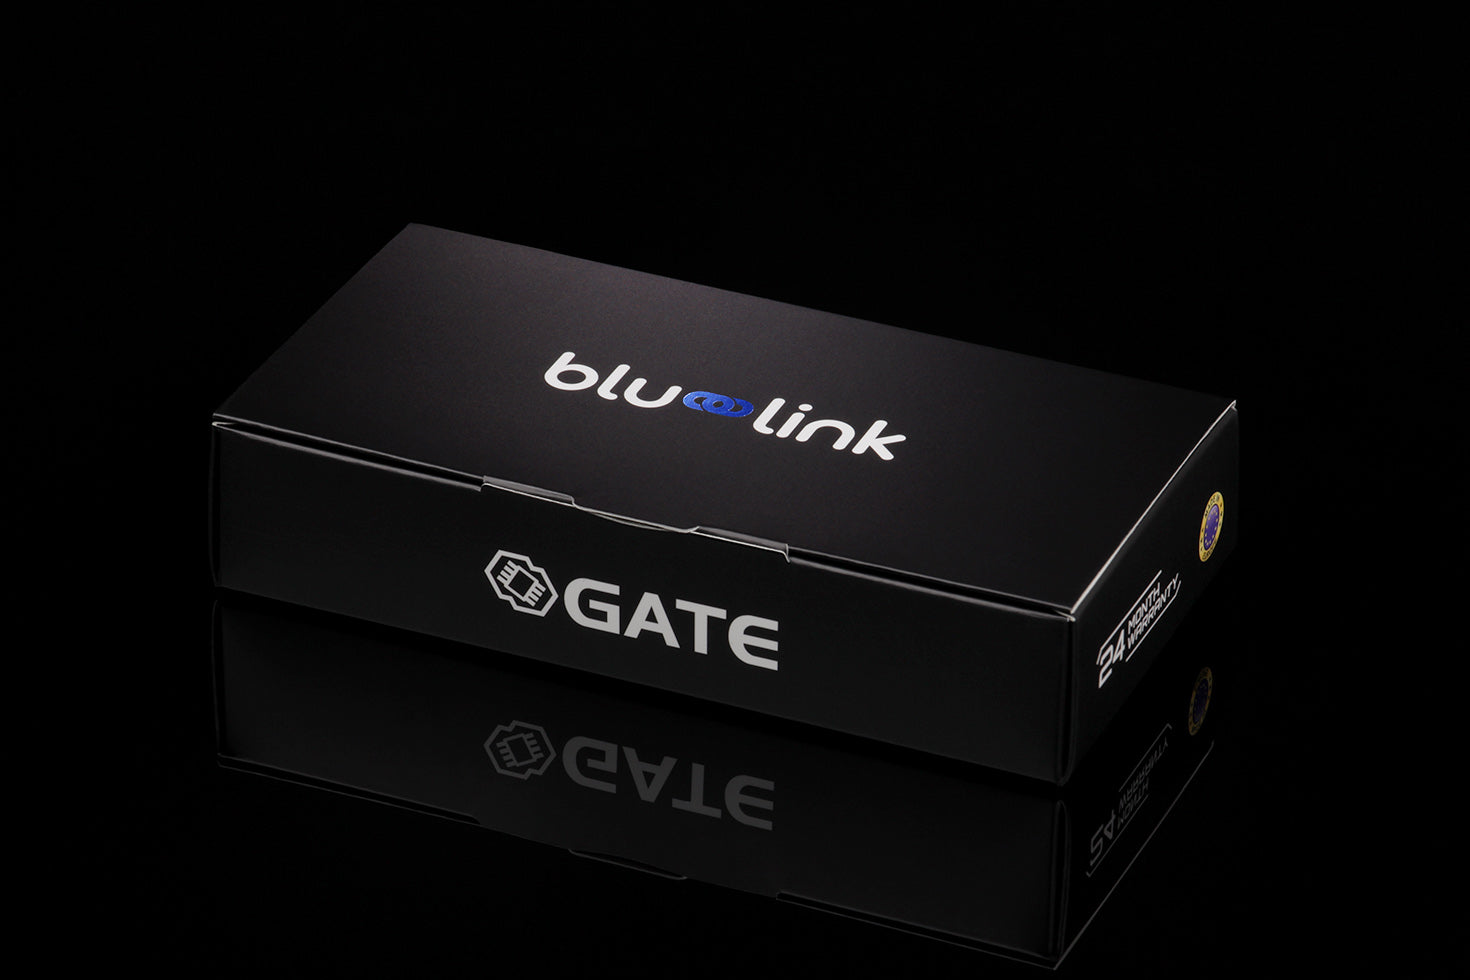 Blu-Link – GATE Enterprise EUR